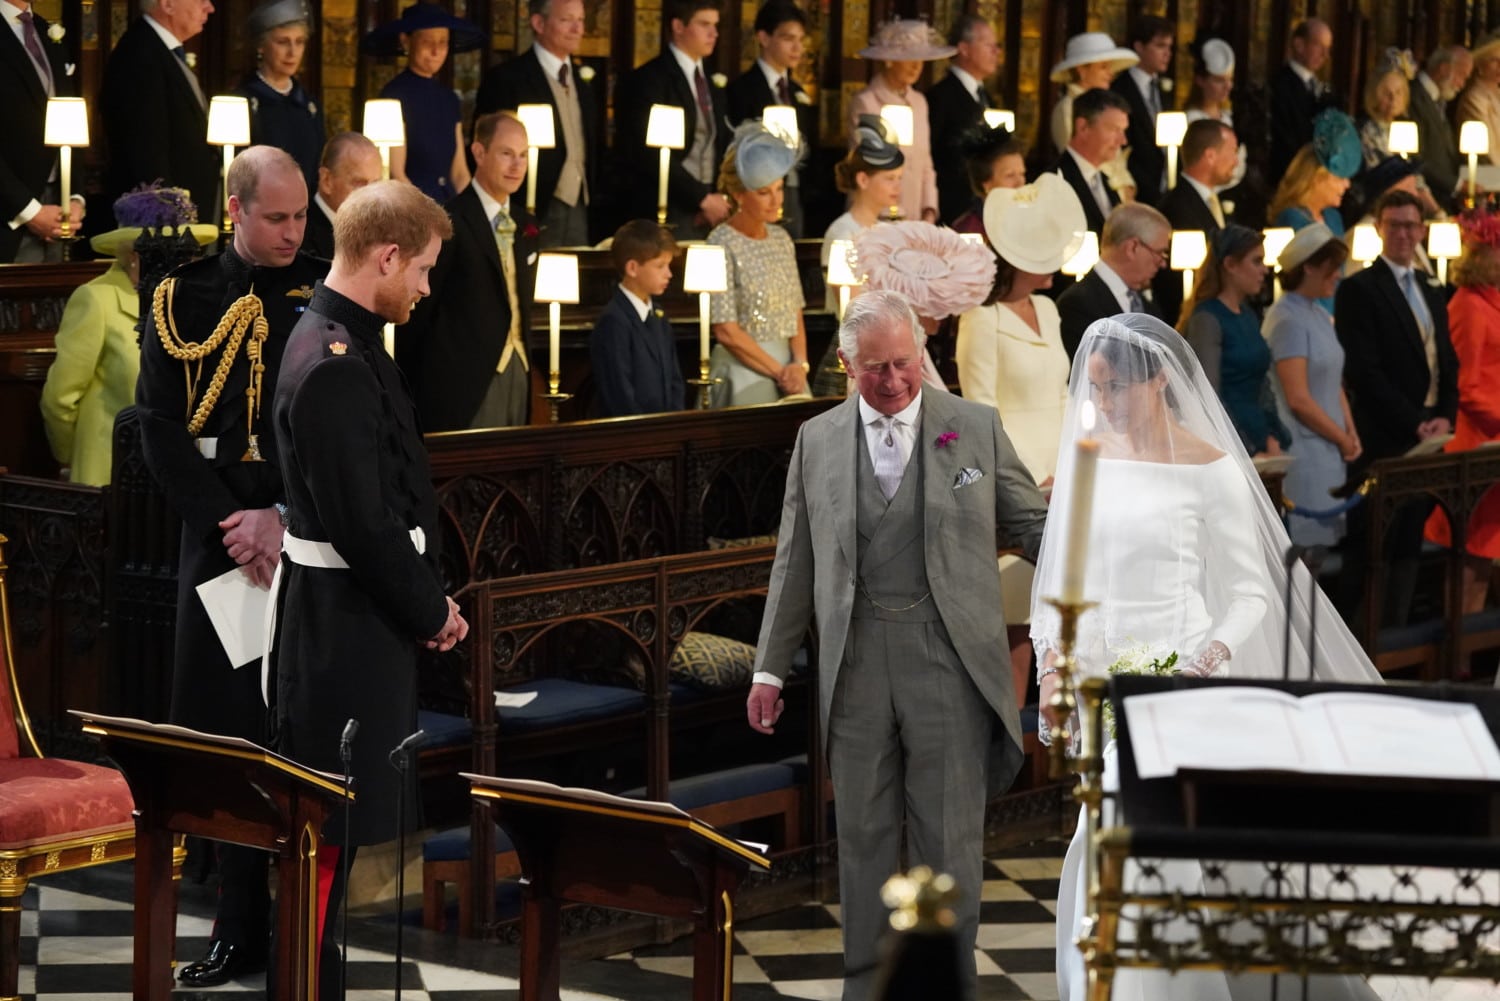 royal wedding photo